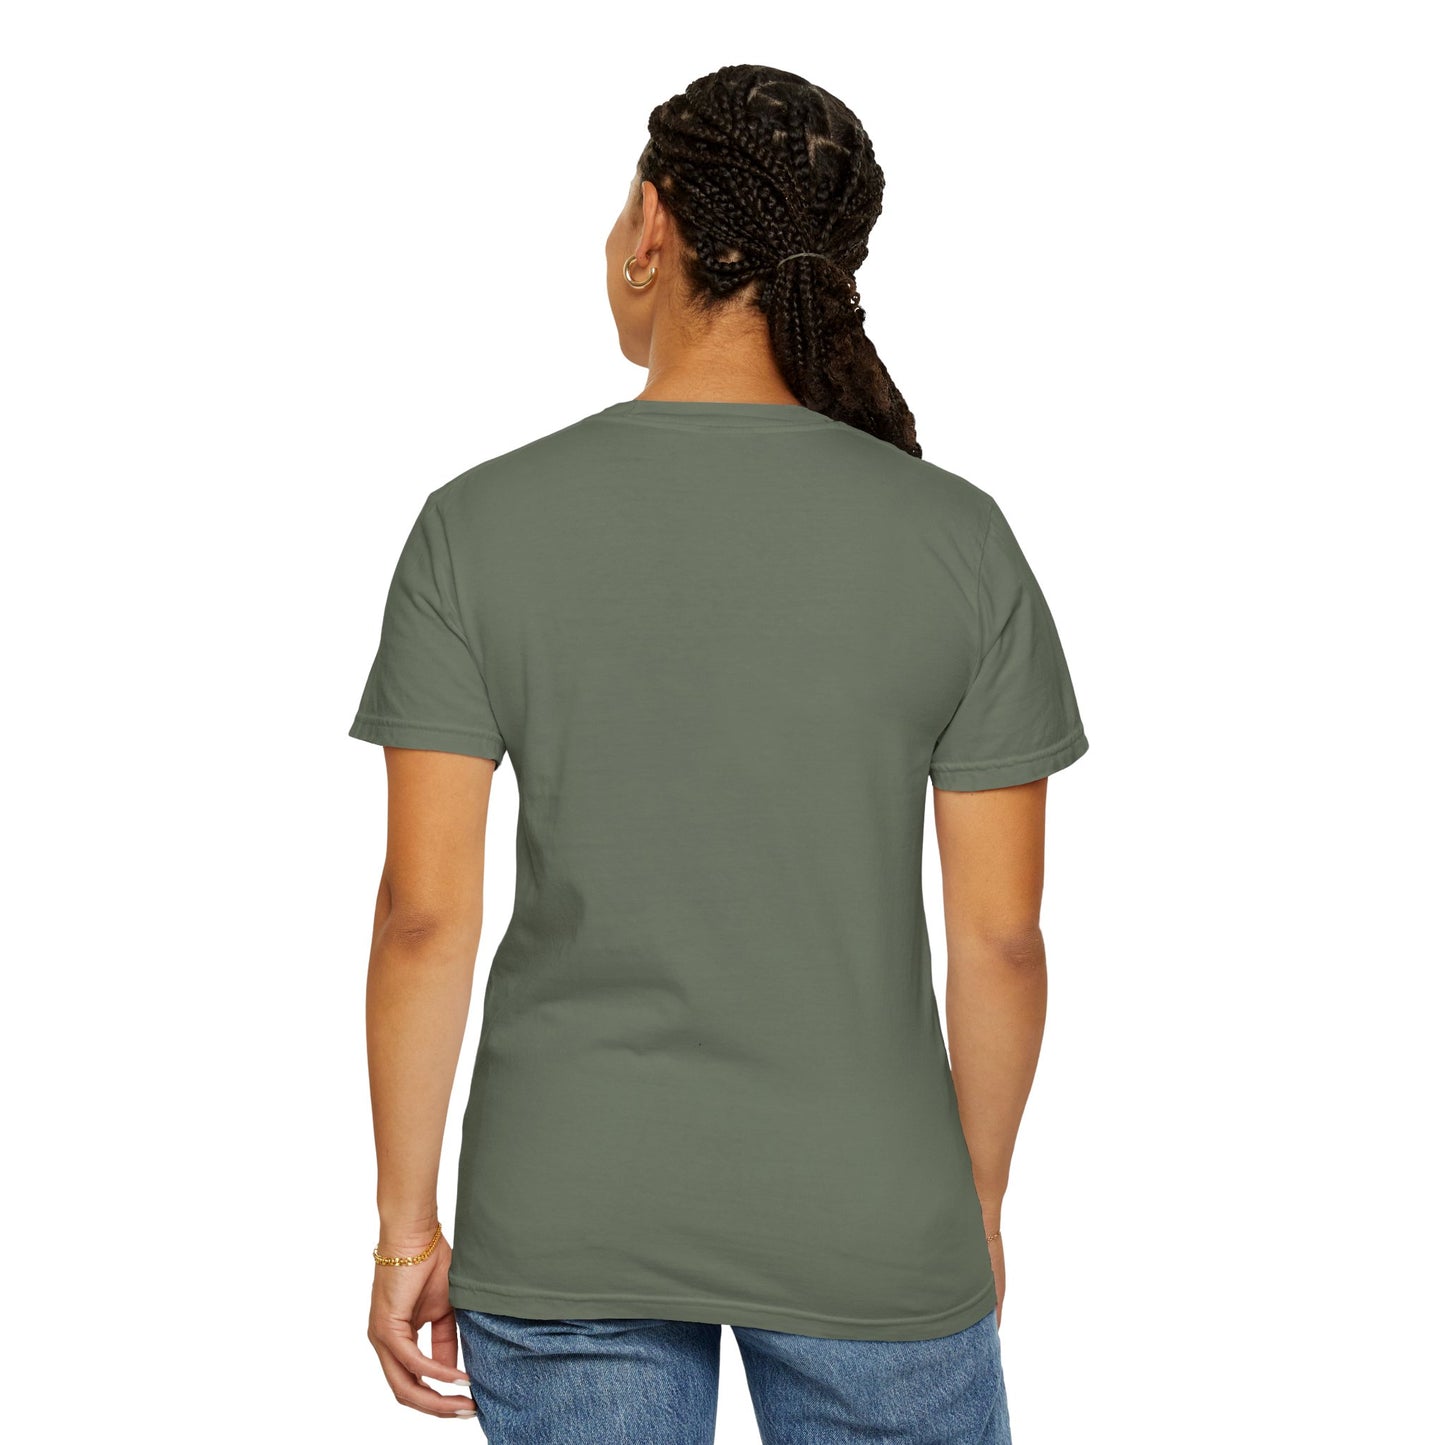 Dear Karma - Unisex Garment-Dyed T-shirt